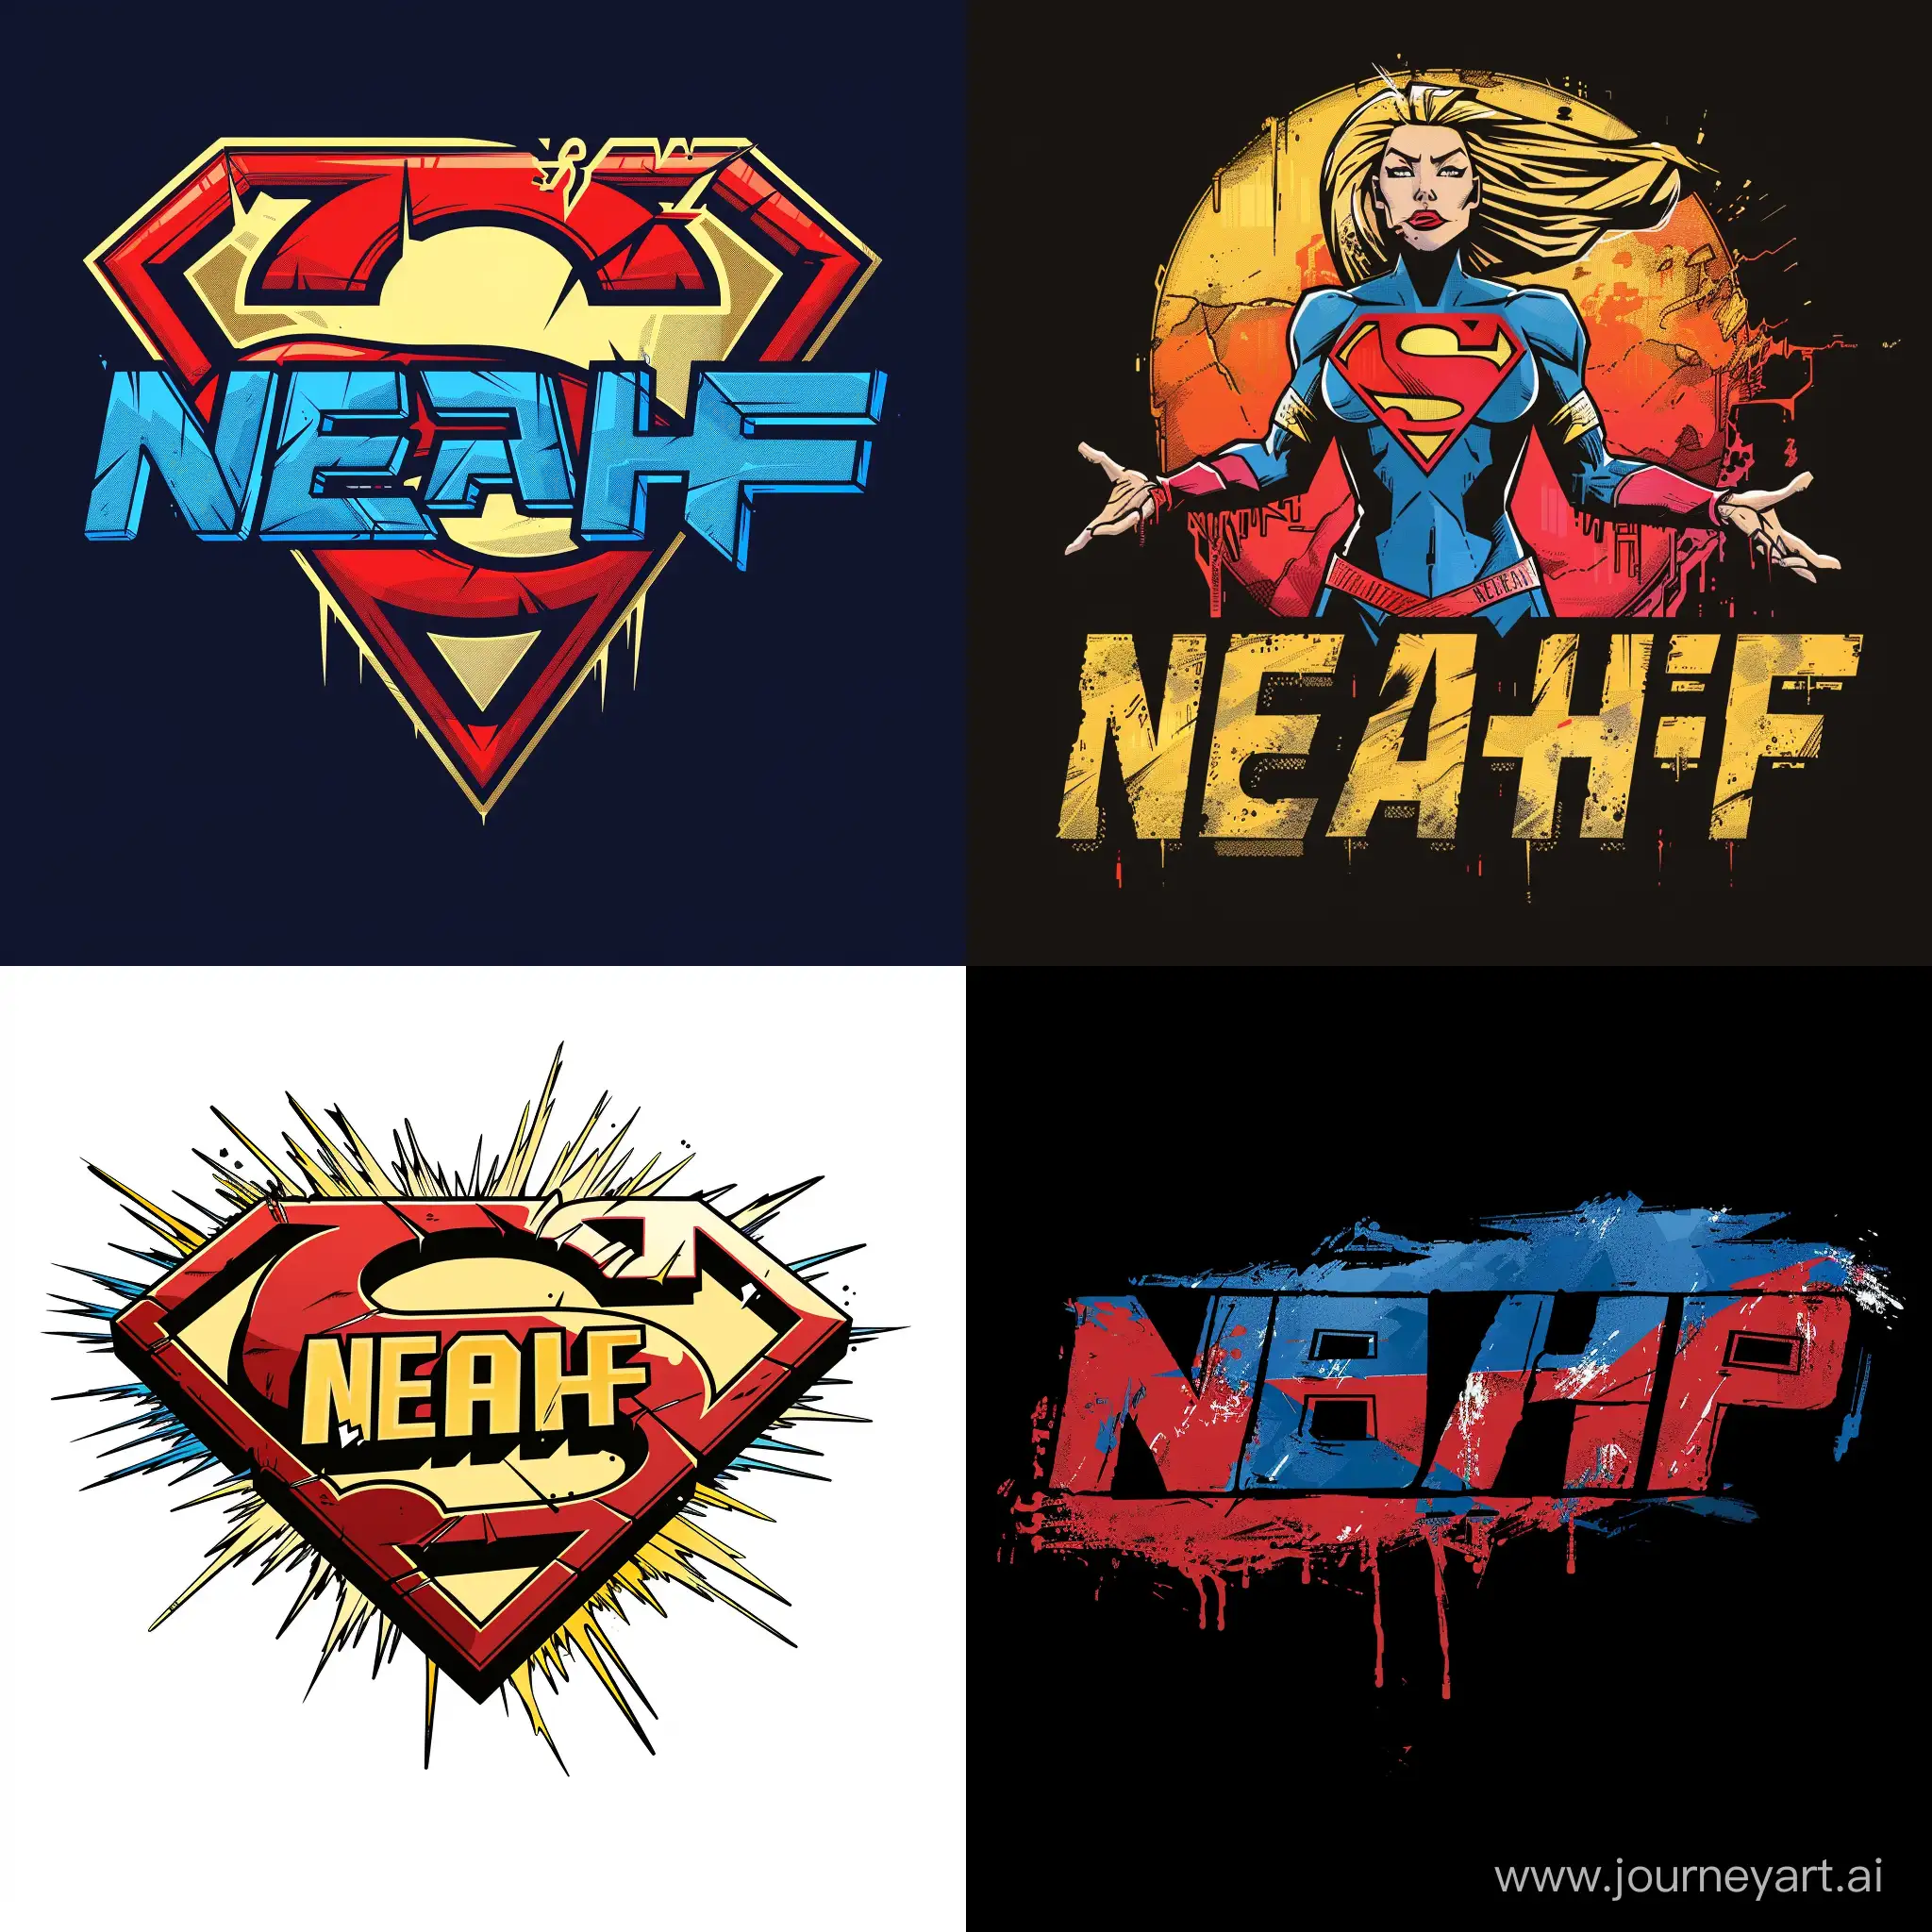 The text "NezaHF" as the super-hero comics logo